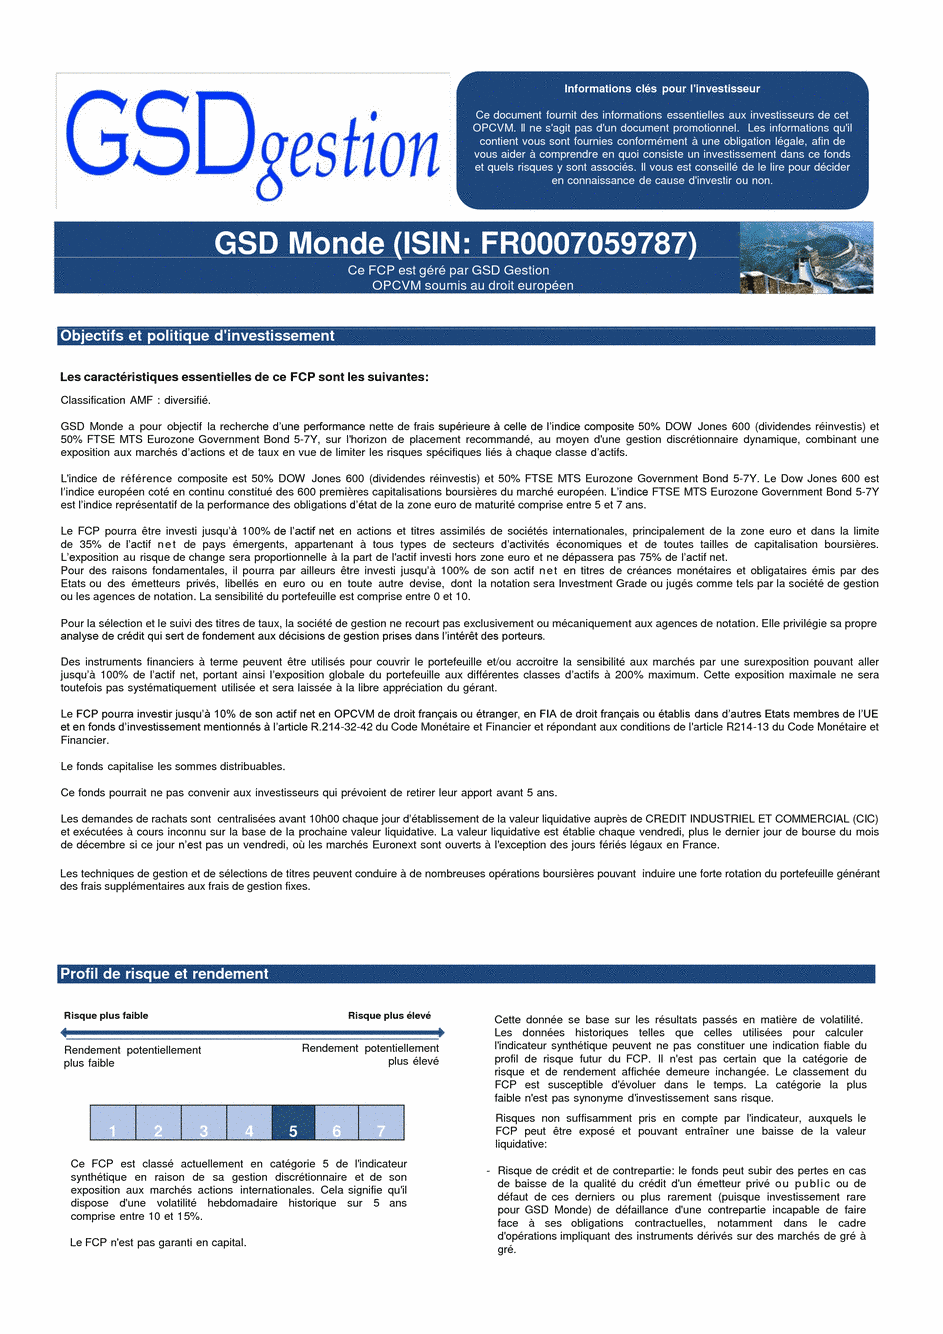 DICI-Prospectus GSD Monde - 17/02/2017 - Français